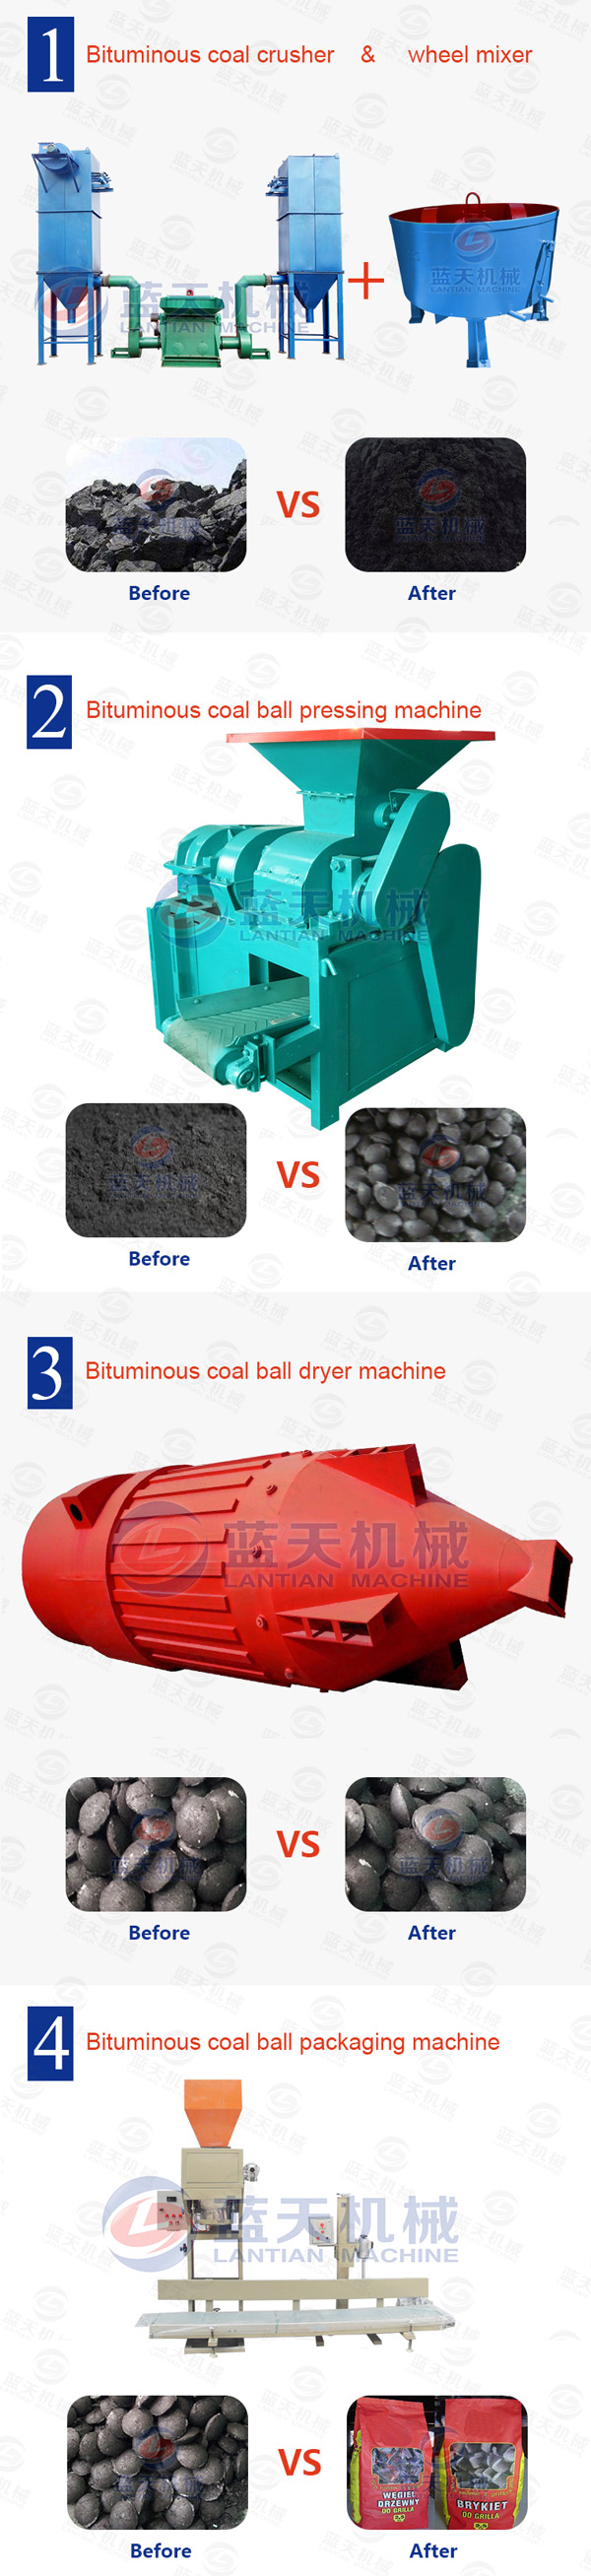 Bituminous Coal Ball Pressing Machine